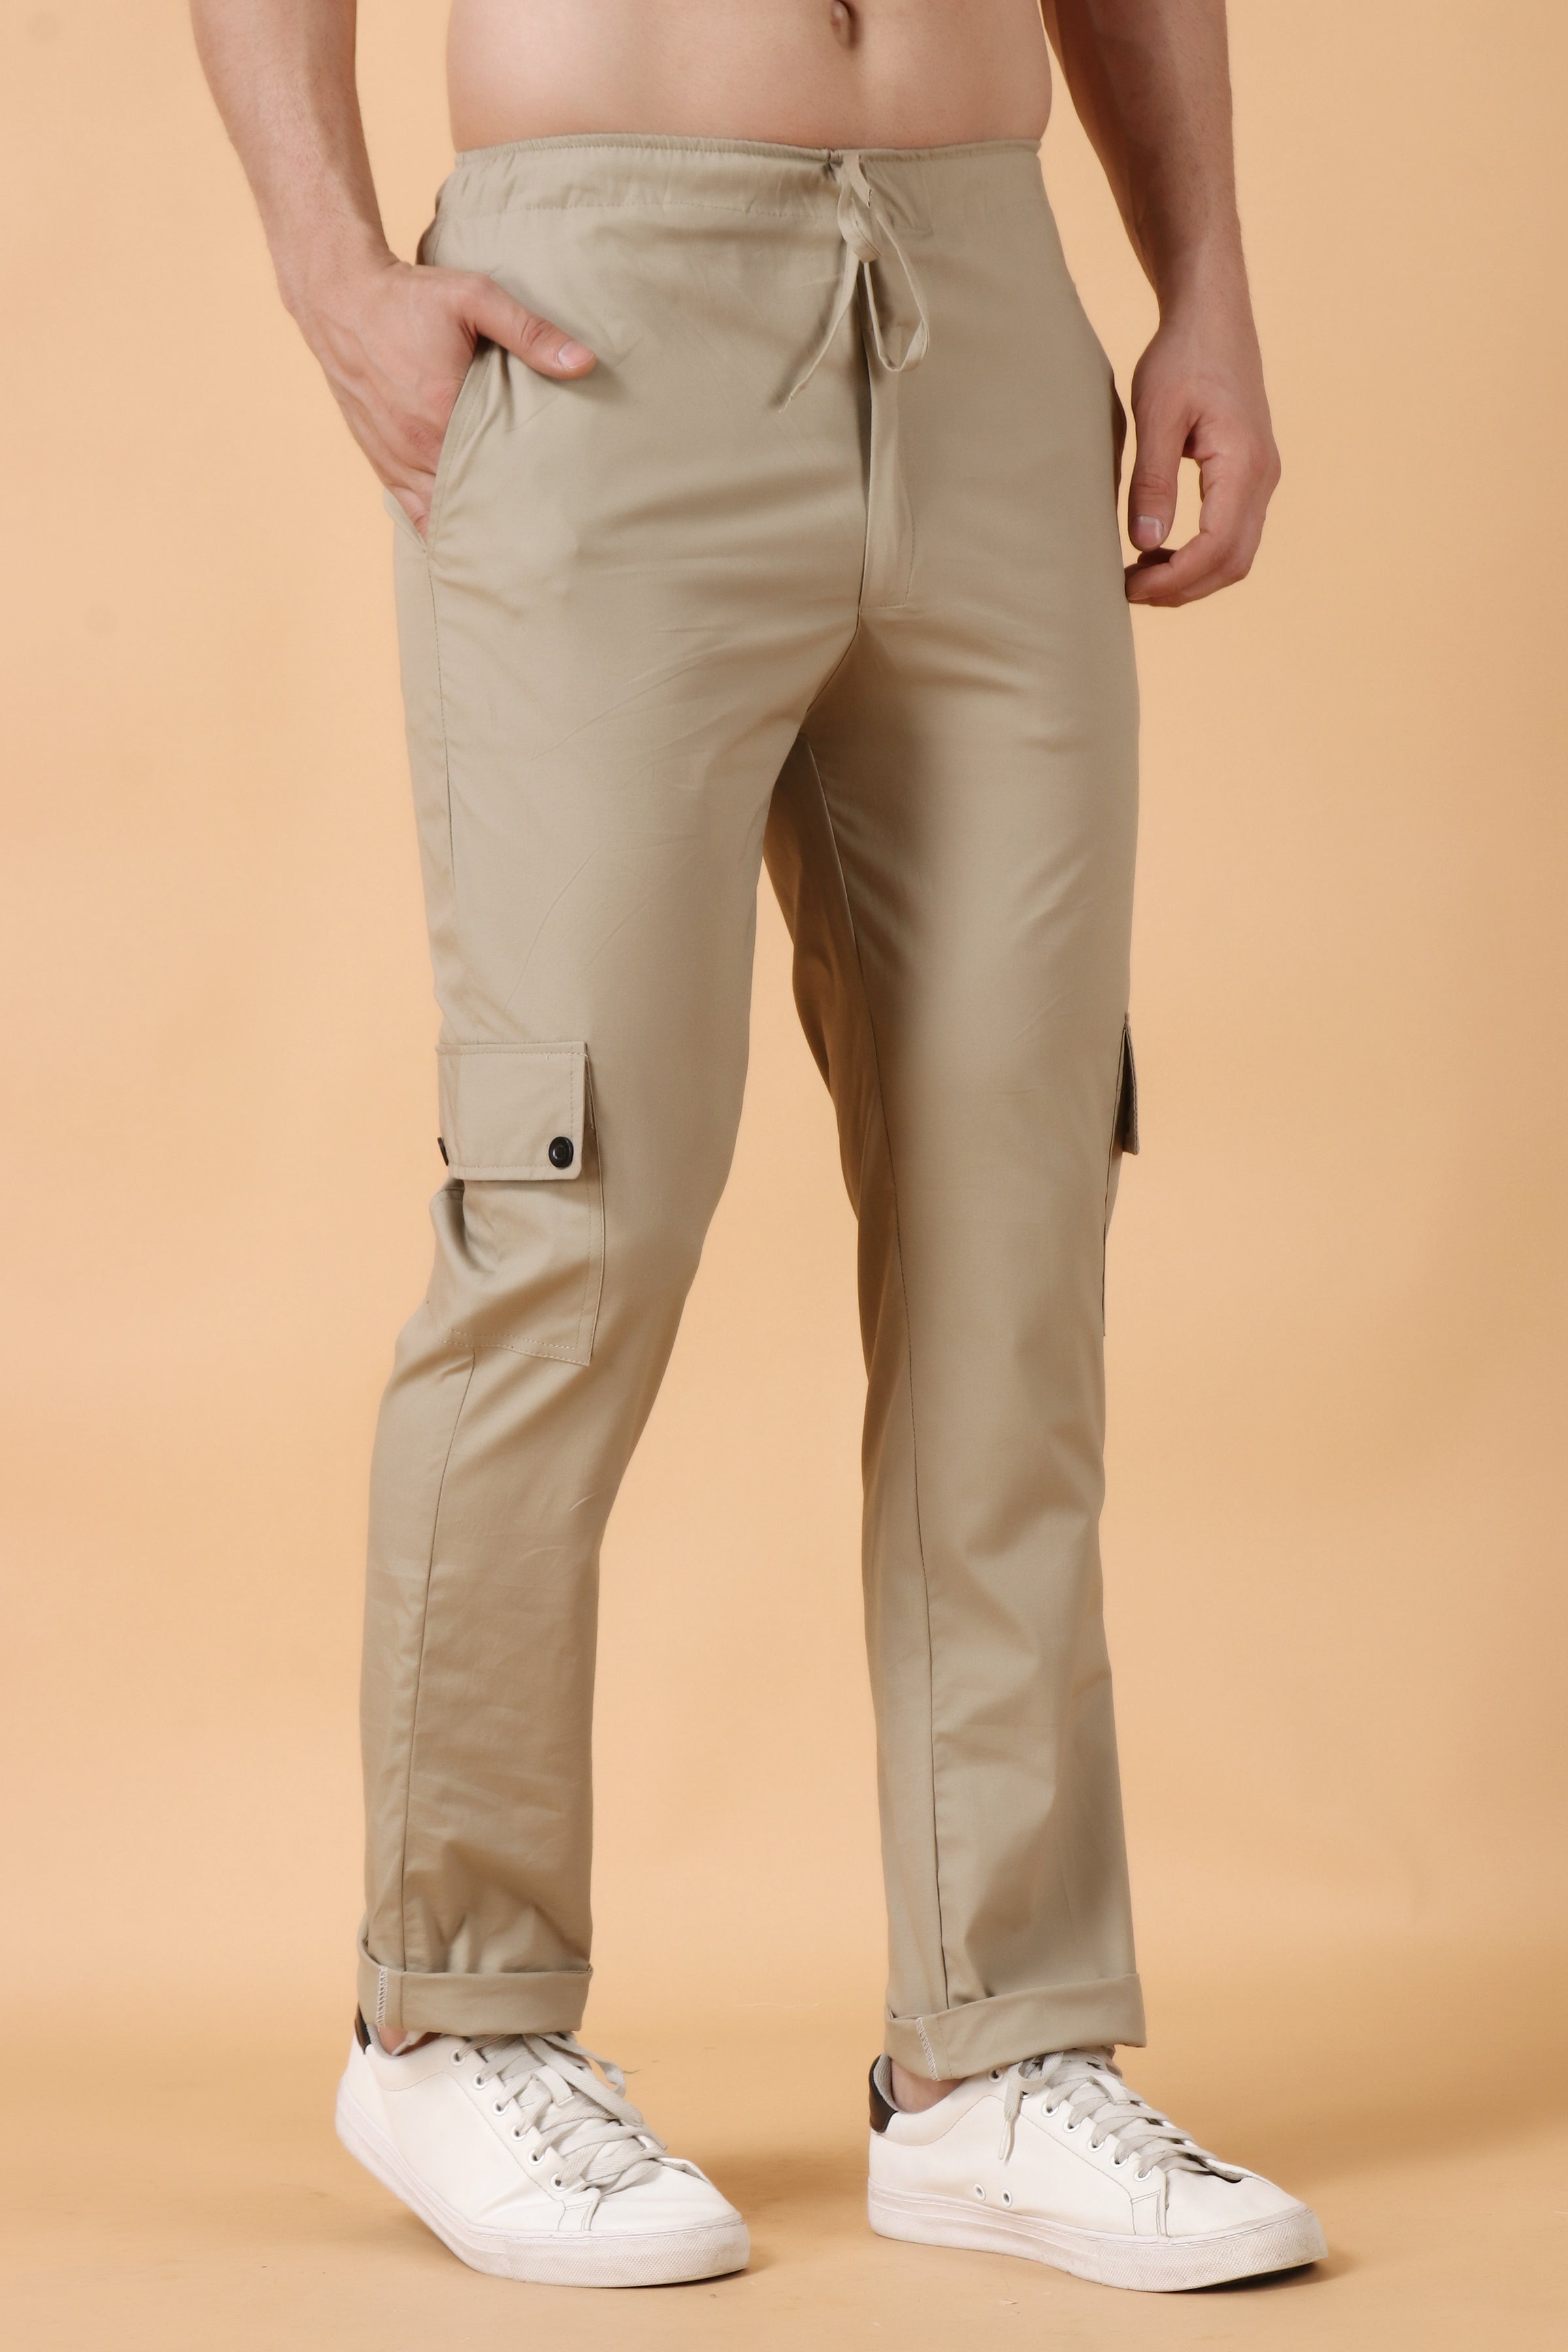 Buy RAREBONE Mens Cargo Pants 100 Cotton RelaxedFit Trousers Elastic  Waistband Lightweight Work Sweatpants Multi Pockets Khaki Large at  Amazonin